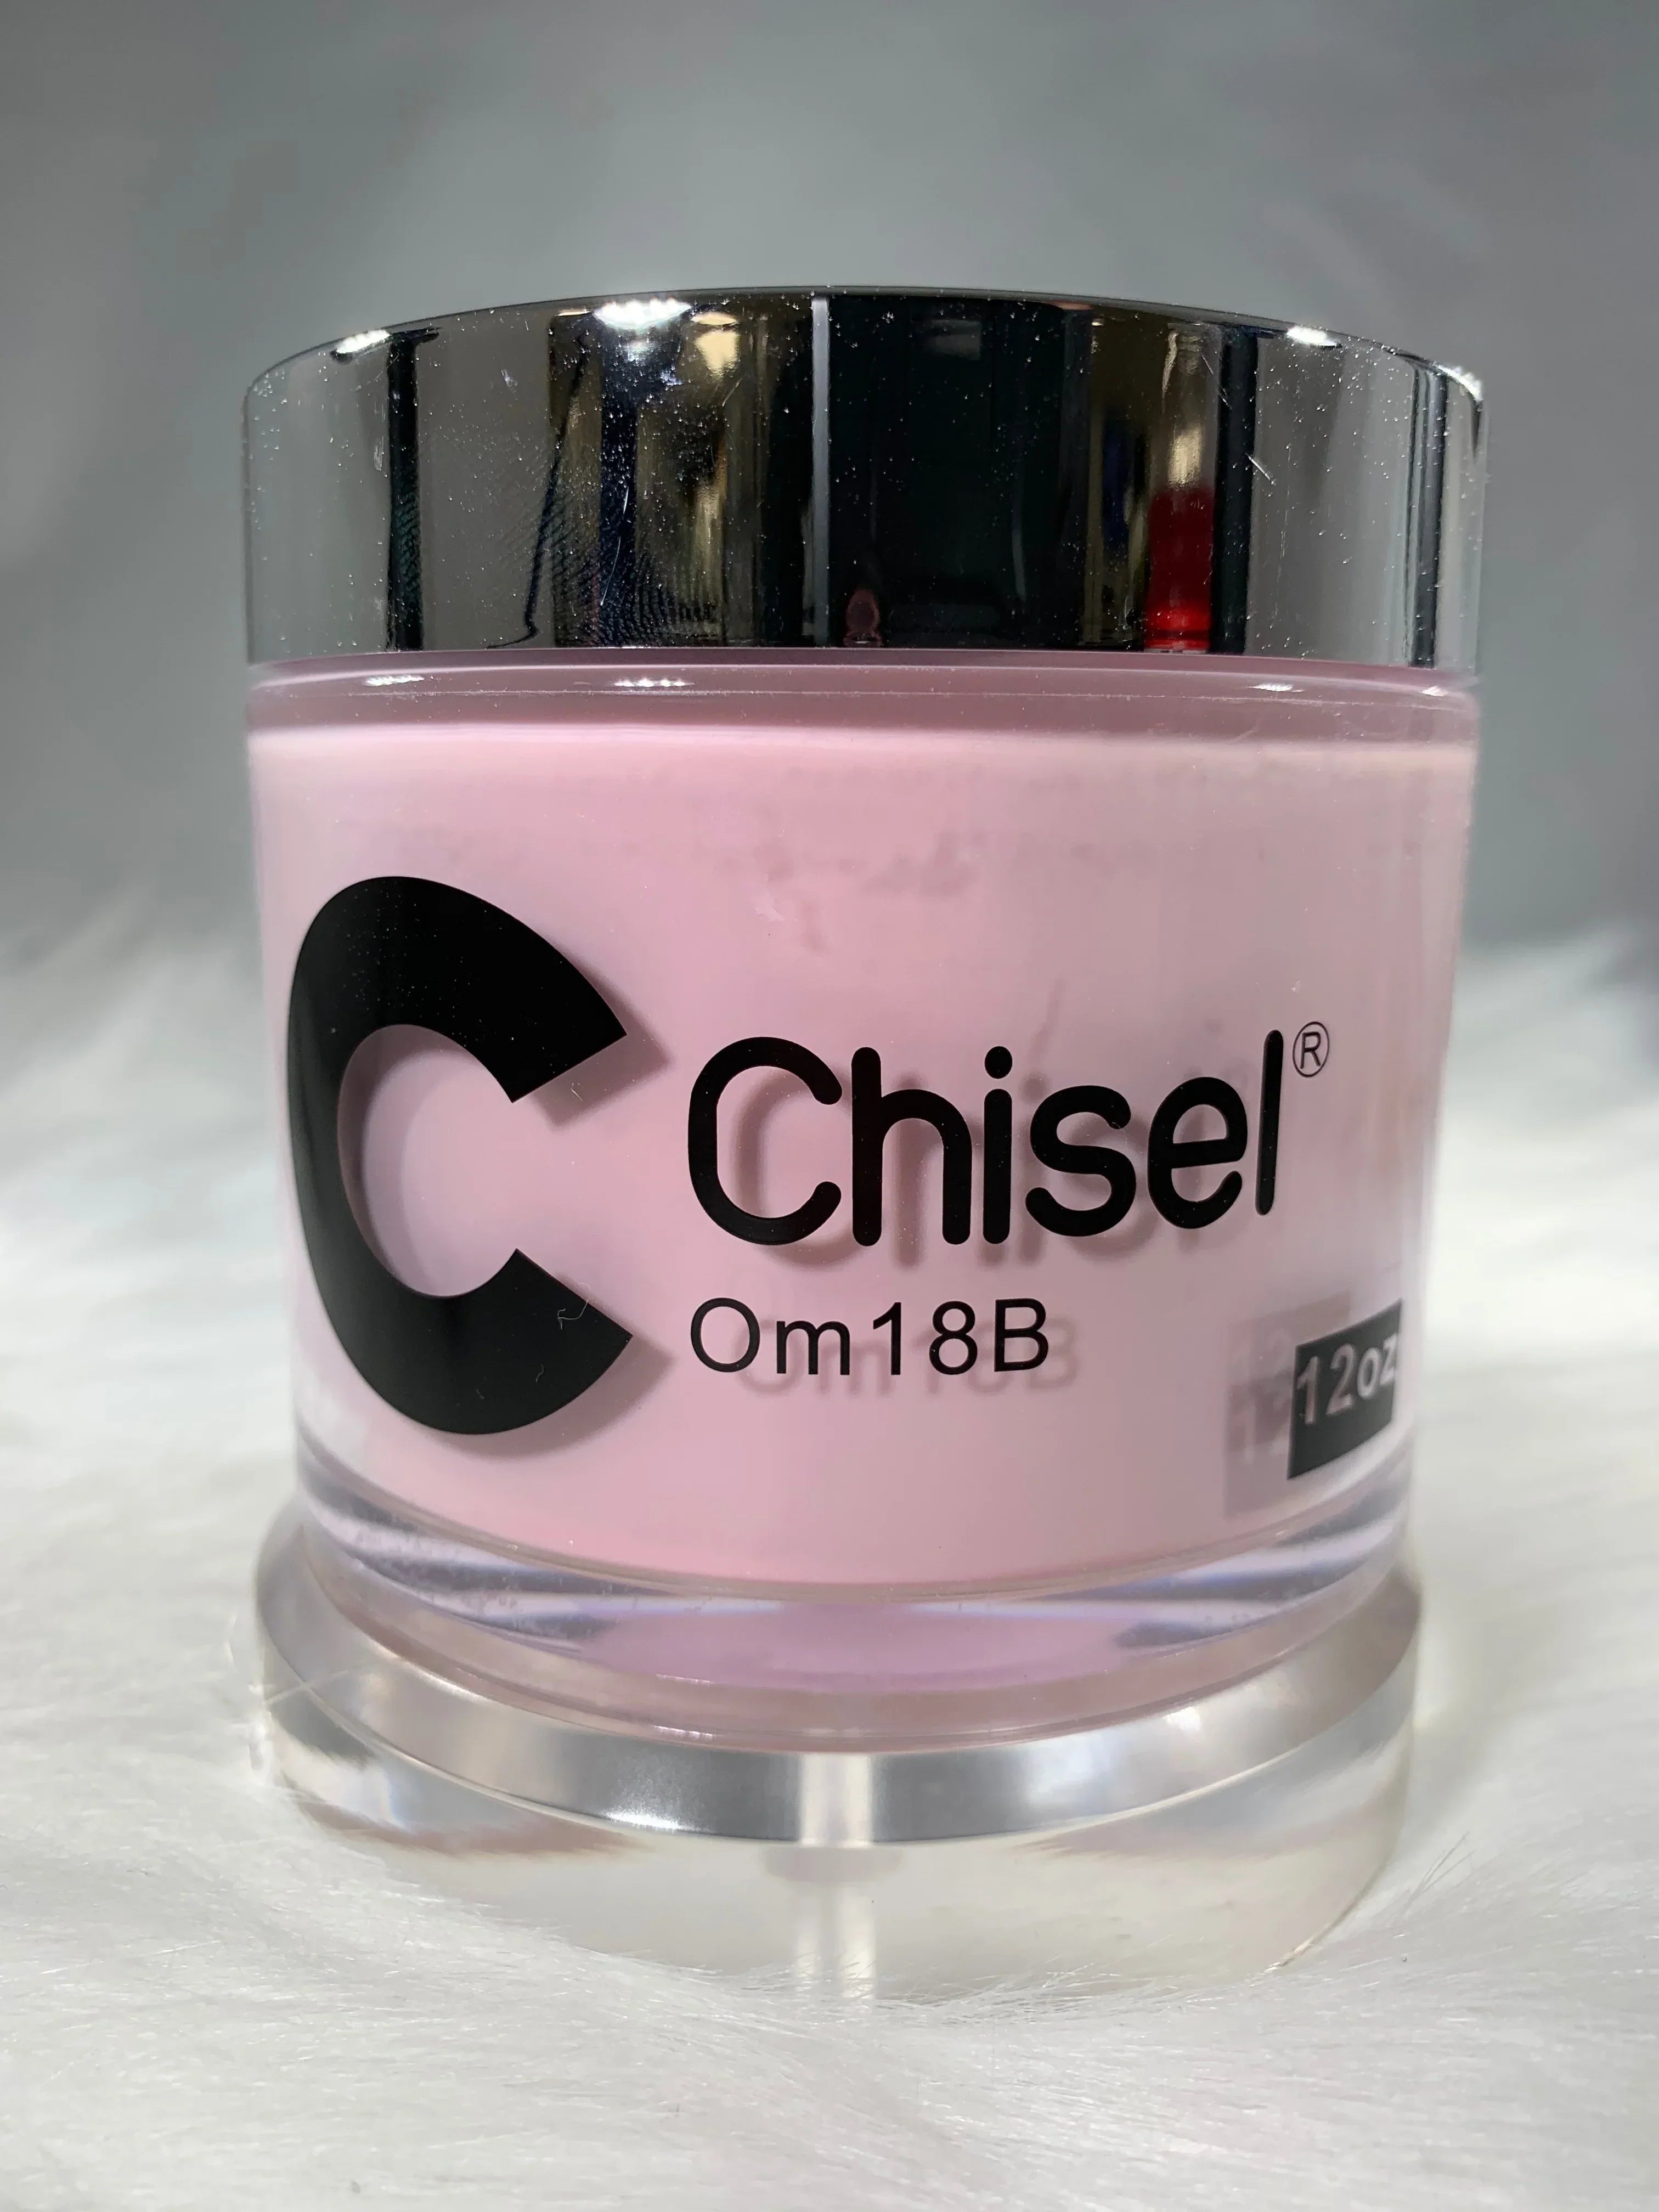 Chisel refill, chisel OM8B, OM15B, 18B refill (12oz)